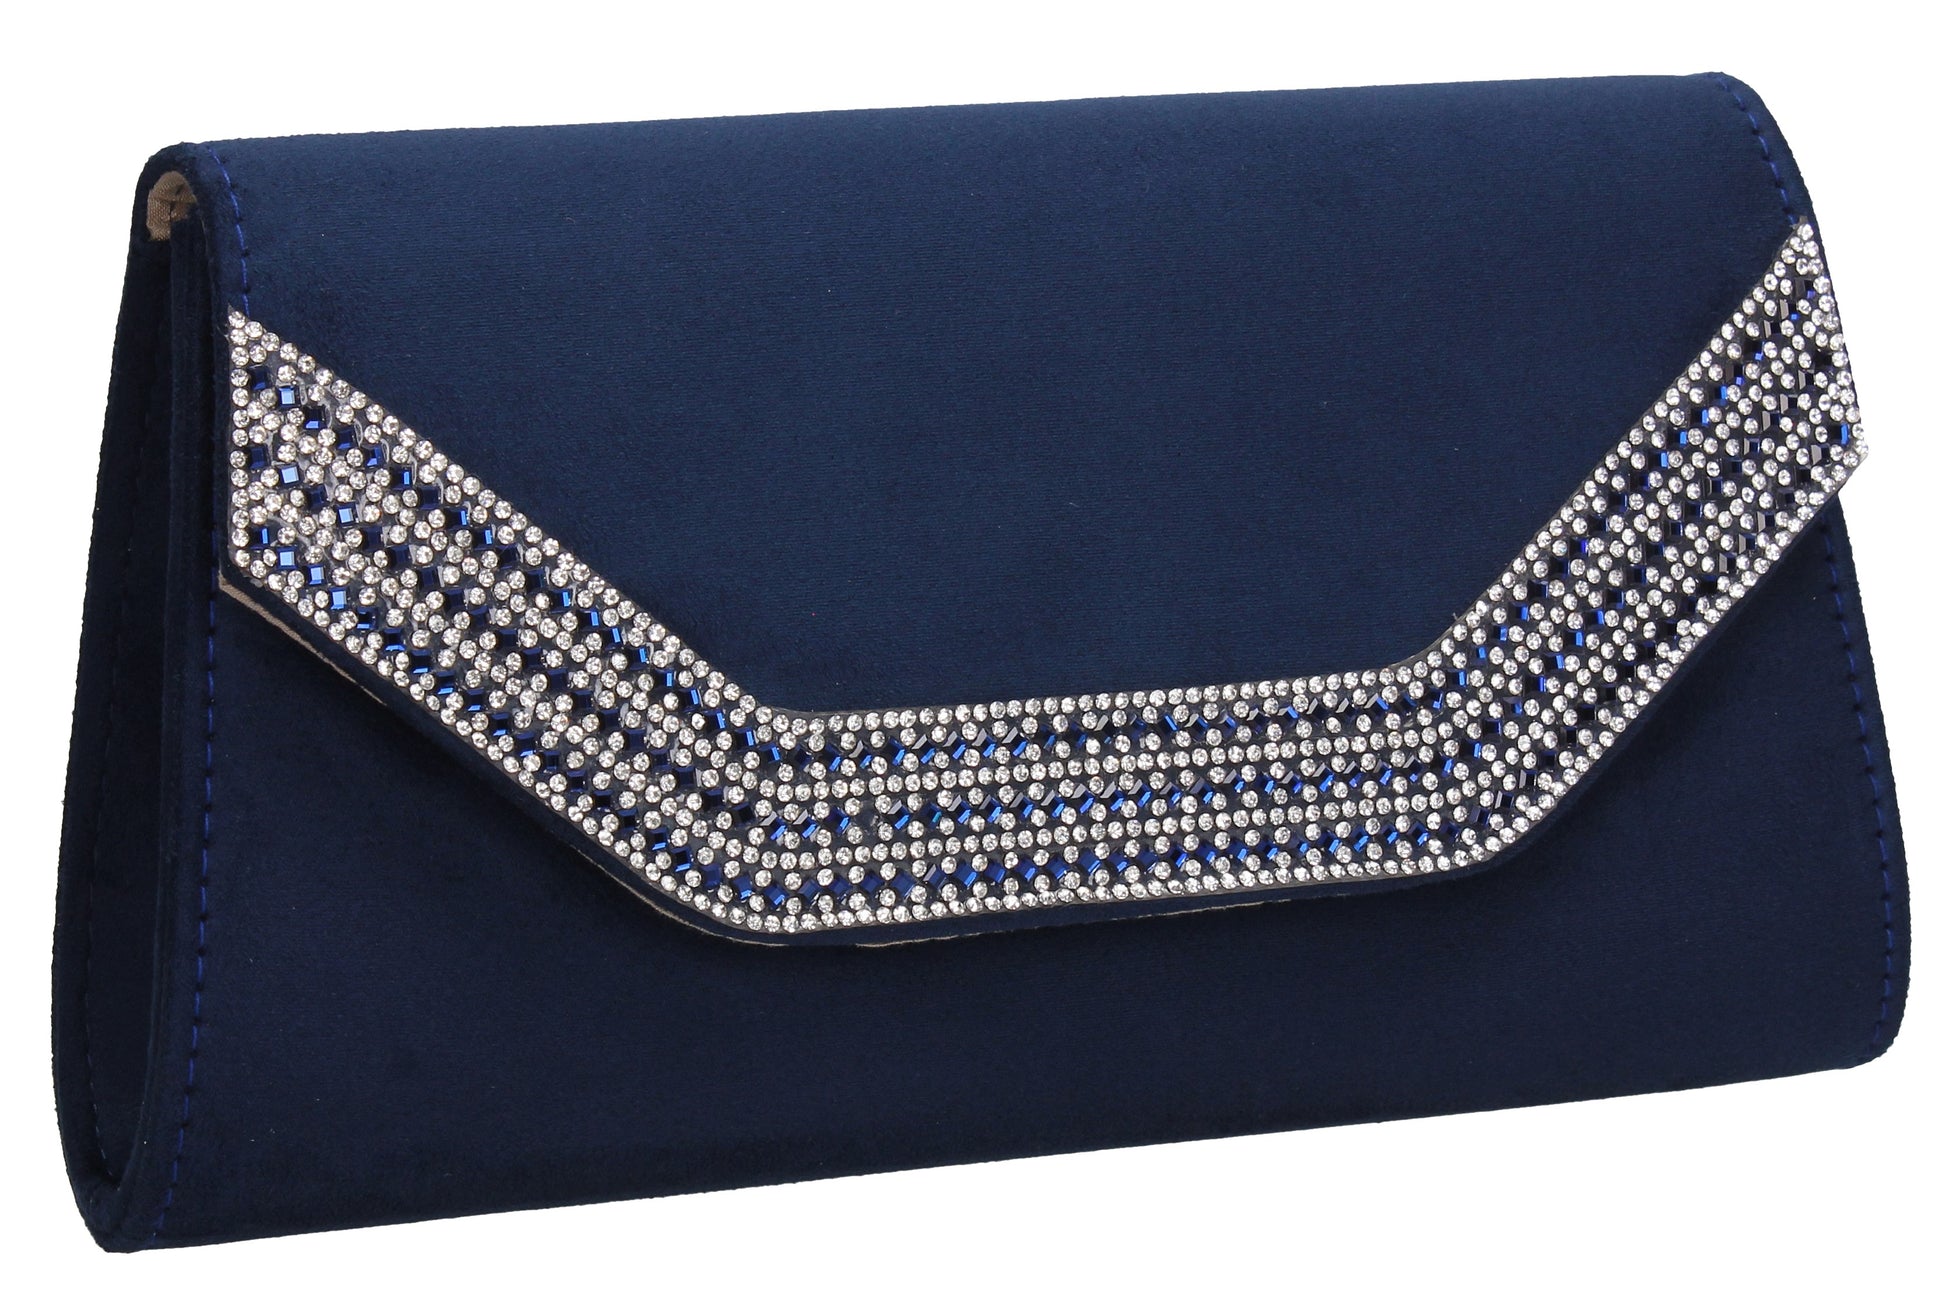 SWANKYSWANS Harper Clutch Bag Navy Blue Cute Cheap Clutch Bag For Weddings School and Work